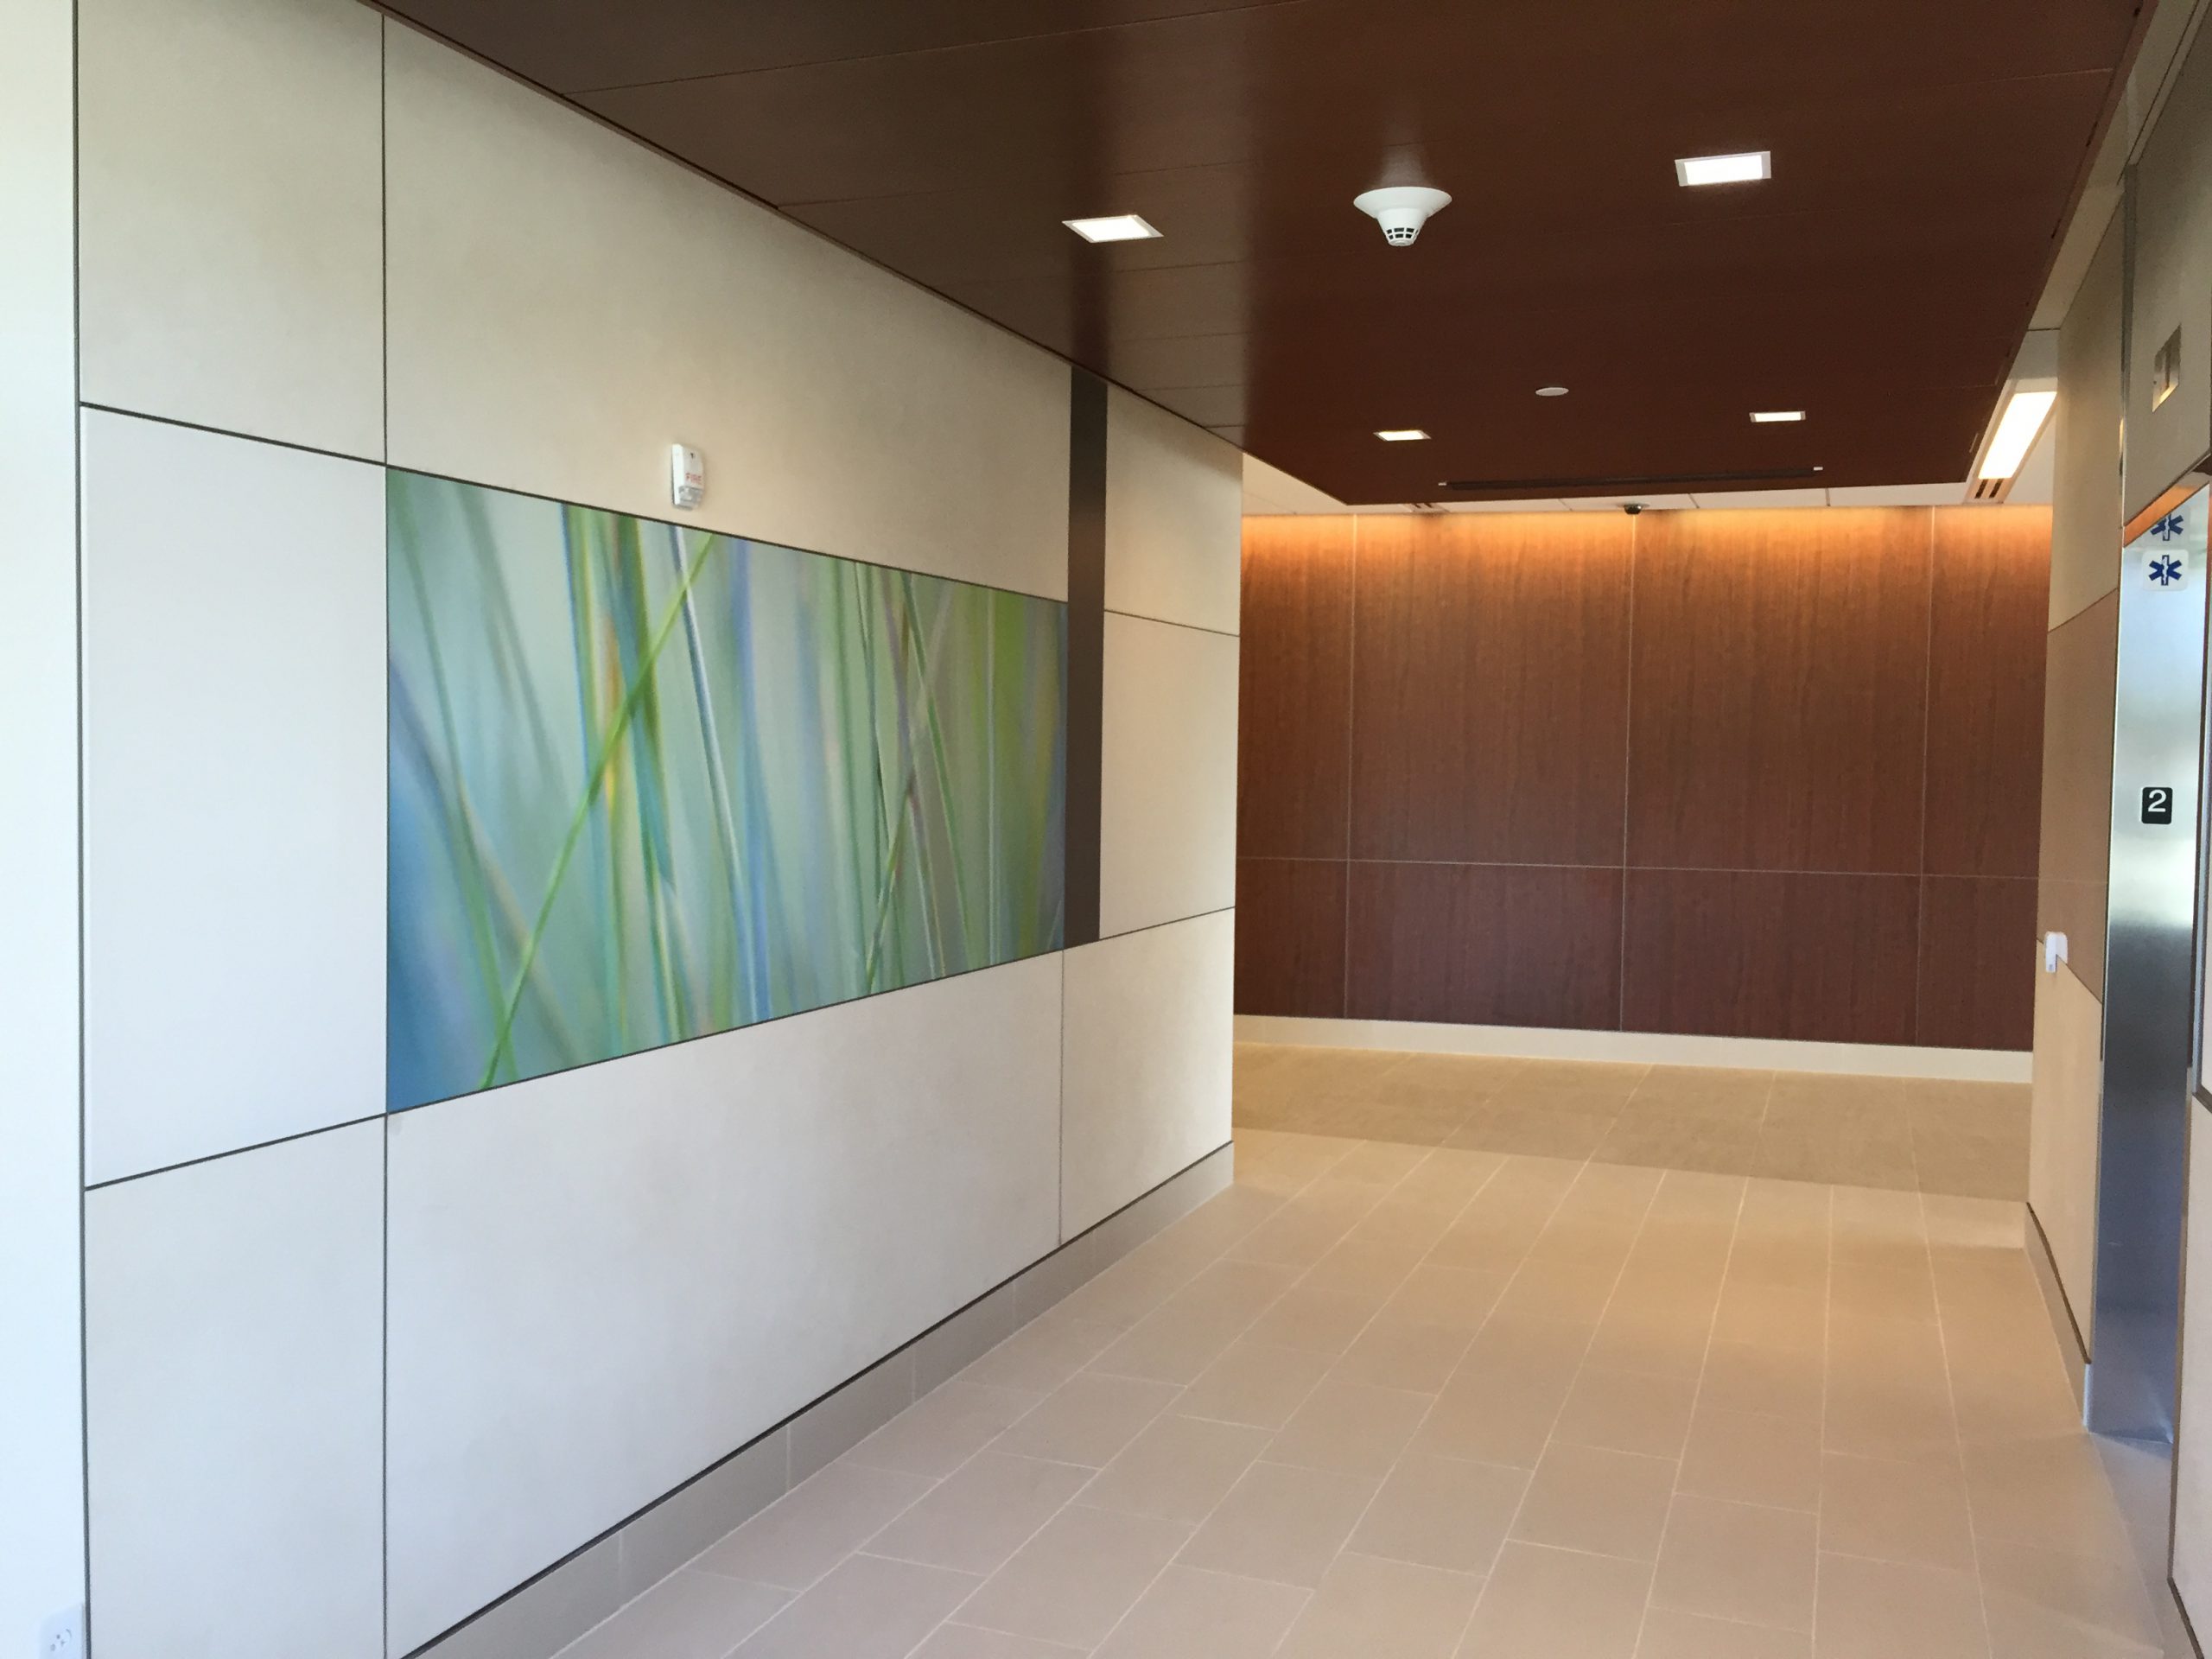 Pomona Valley Hospital Elevator Lobby - Architectural Hardware